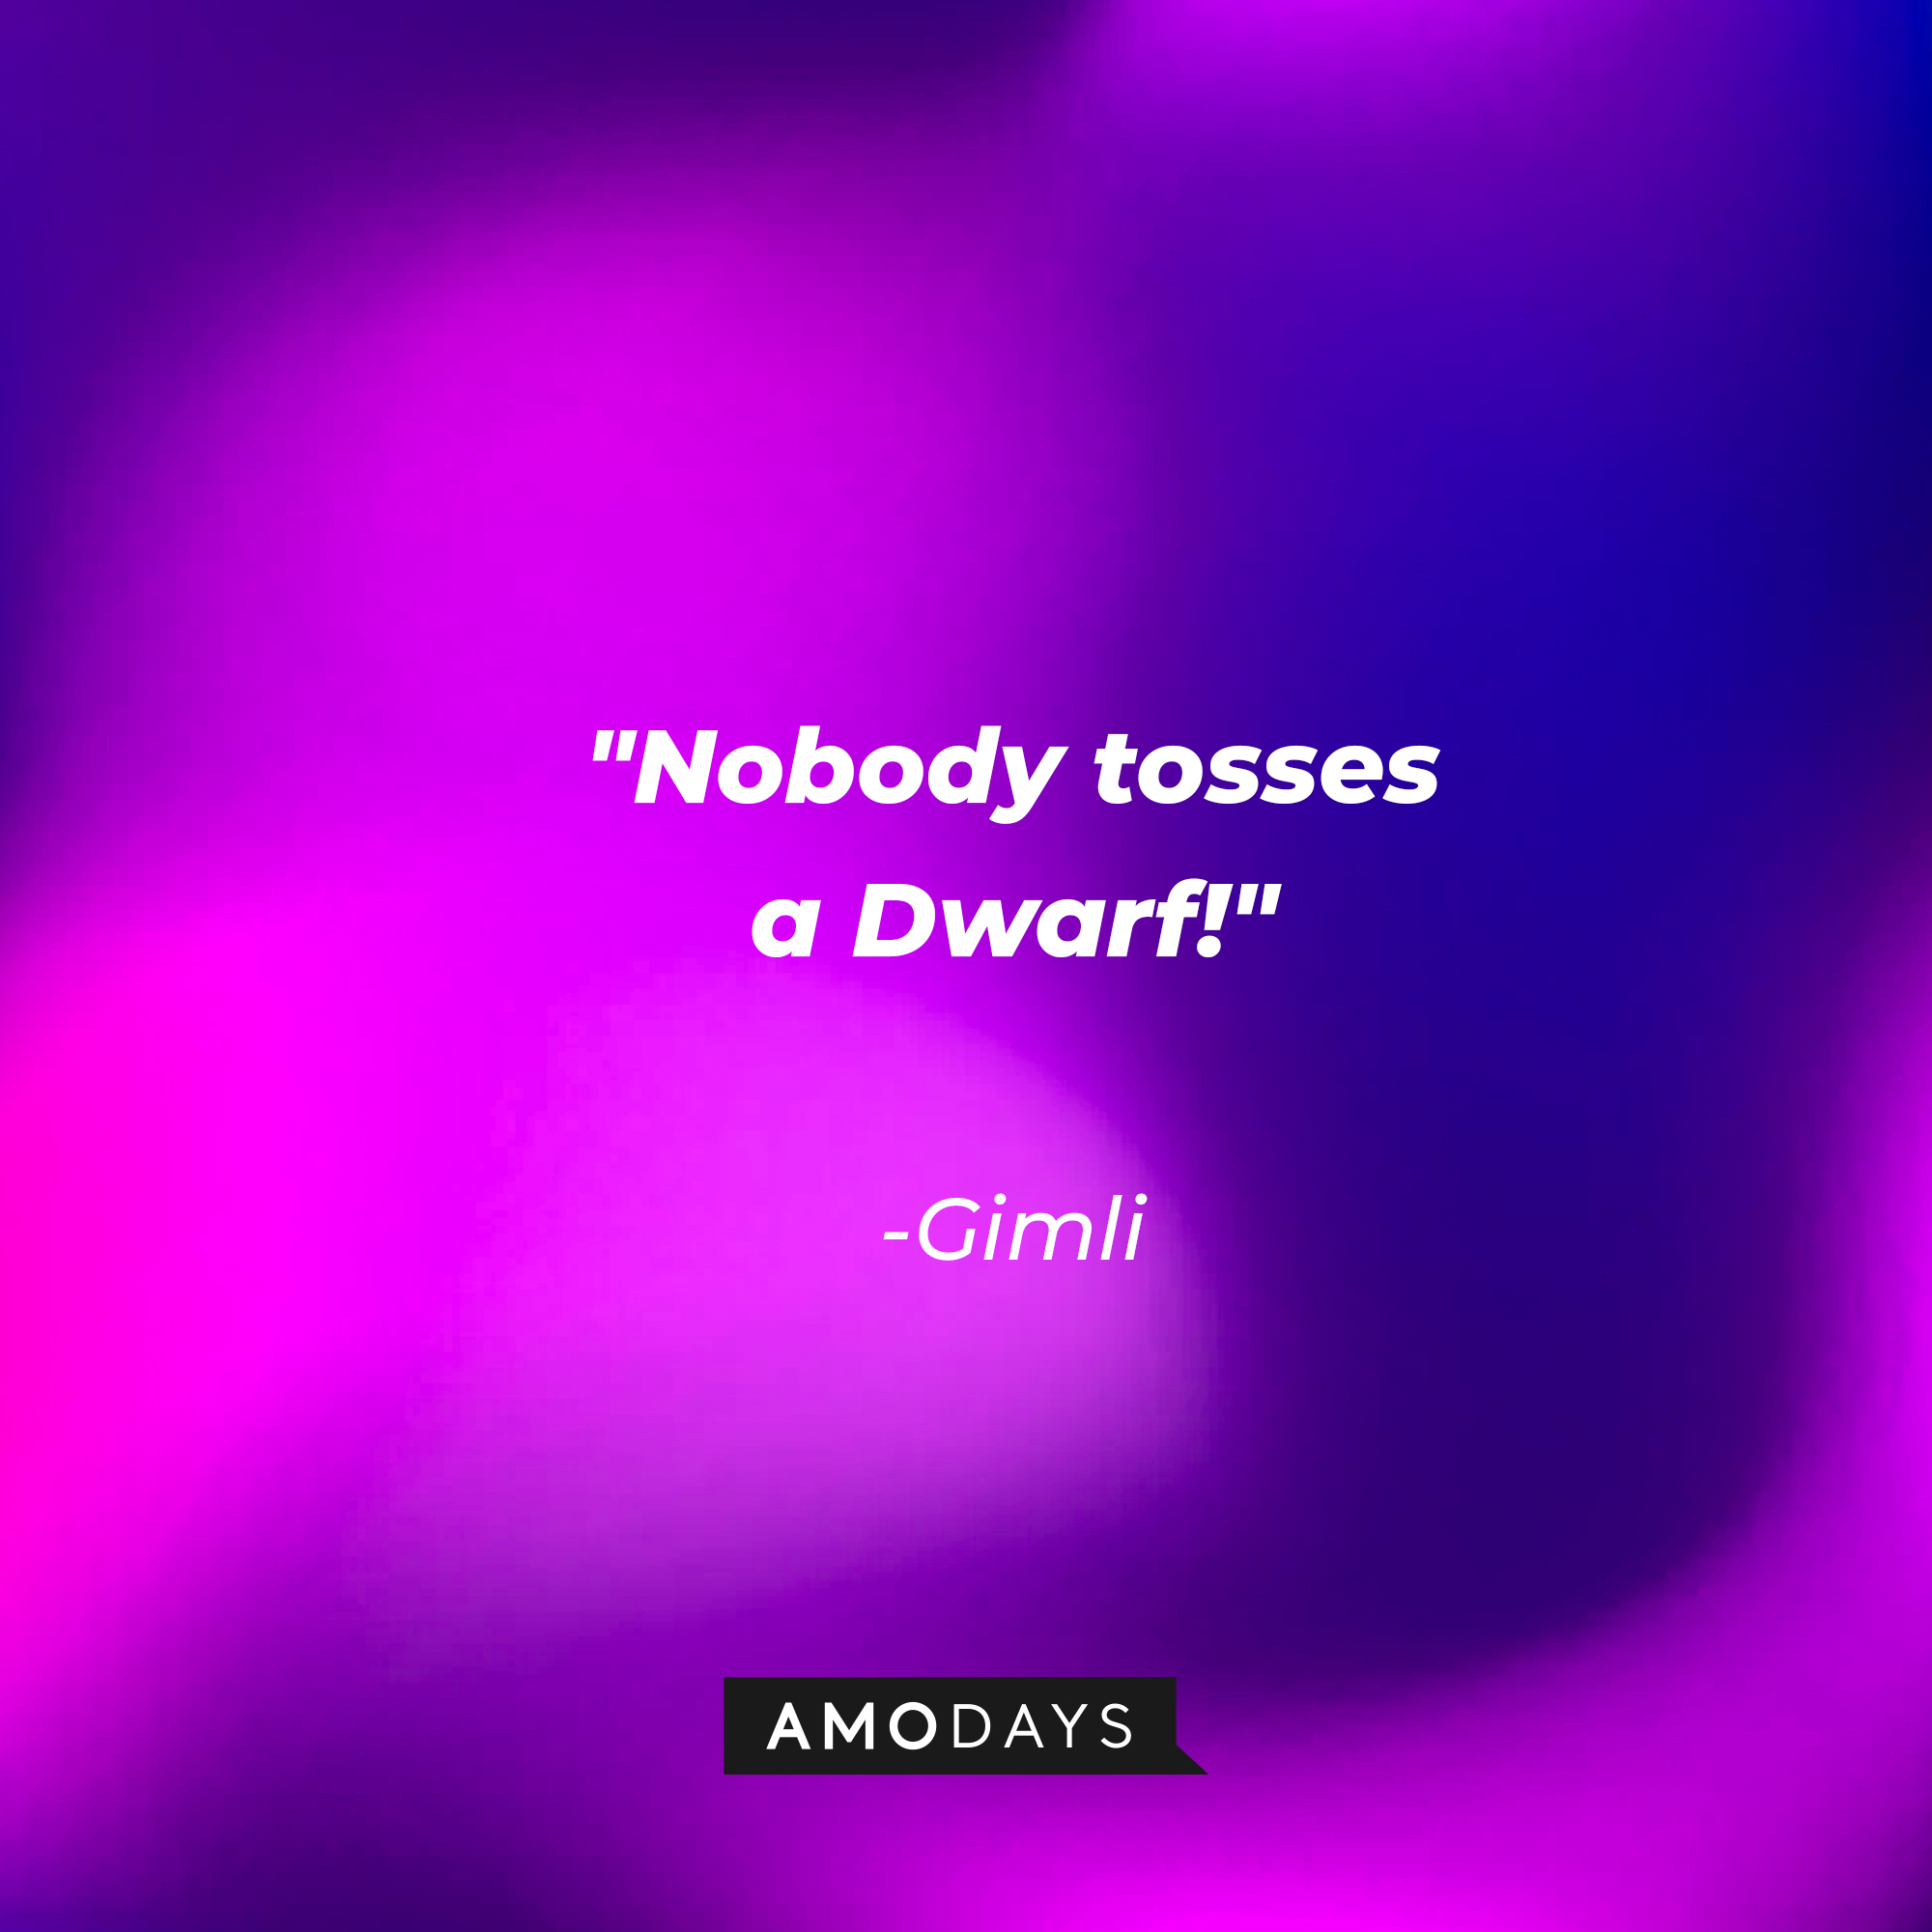 Gimli's quote: "Nobody tosses a Dwarf!" | Source: AmoDays